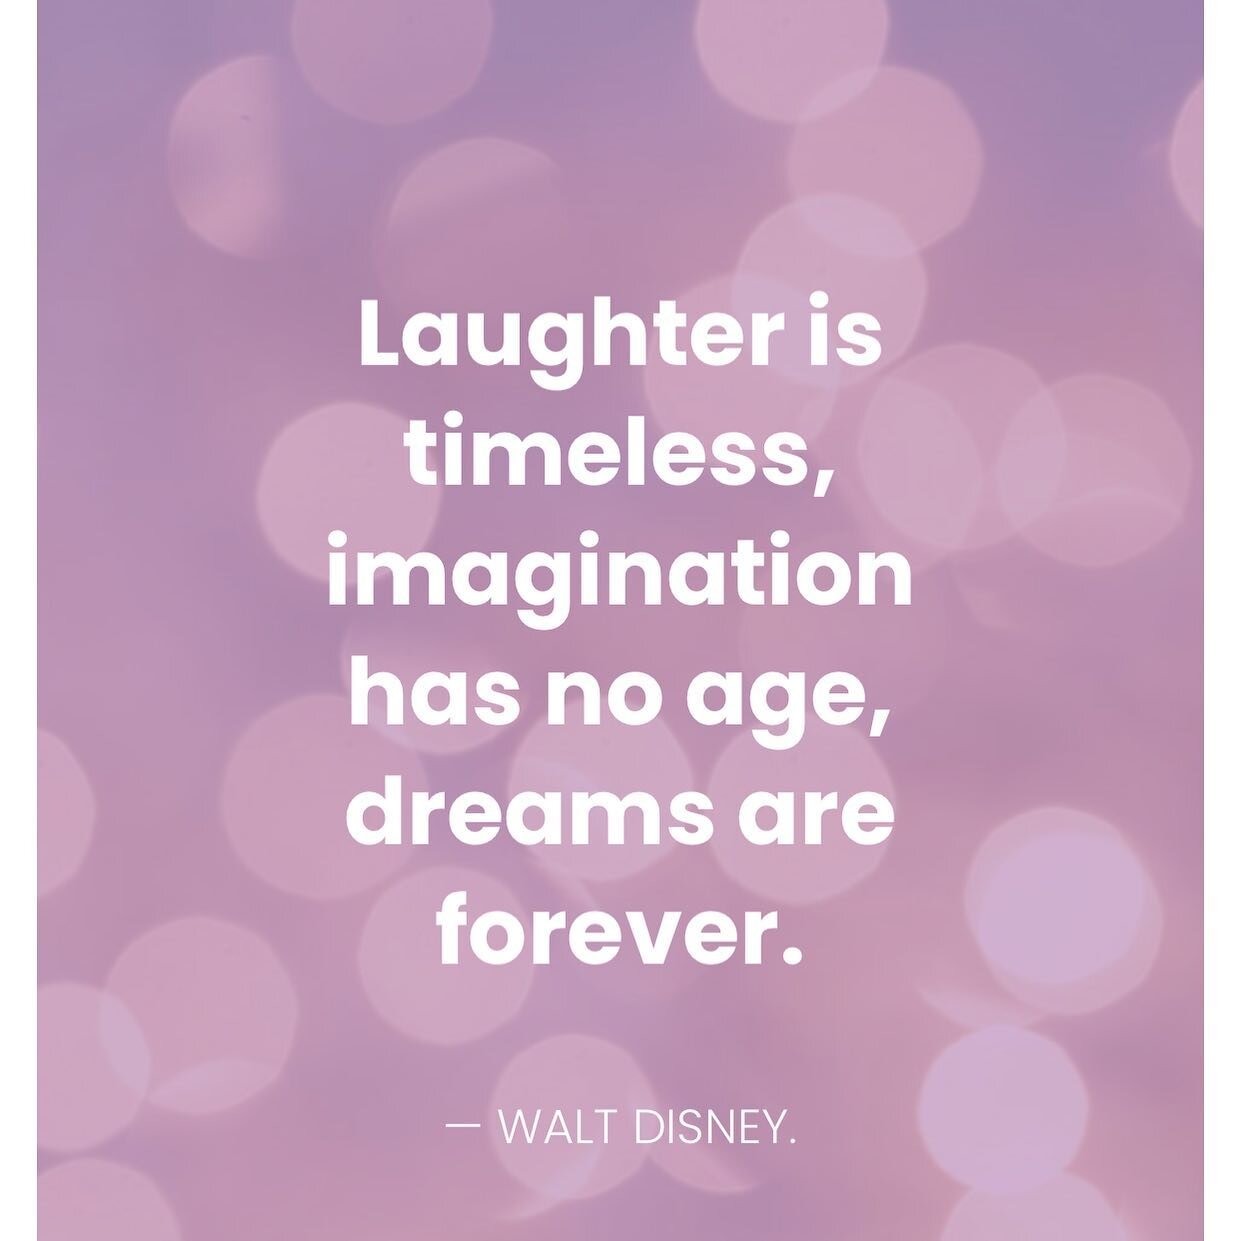 One of my favourite quotes from the boss 😊 #waltdisneyquotes 
#imaginationhasnoage #dreamlikenooneswatching